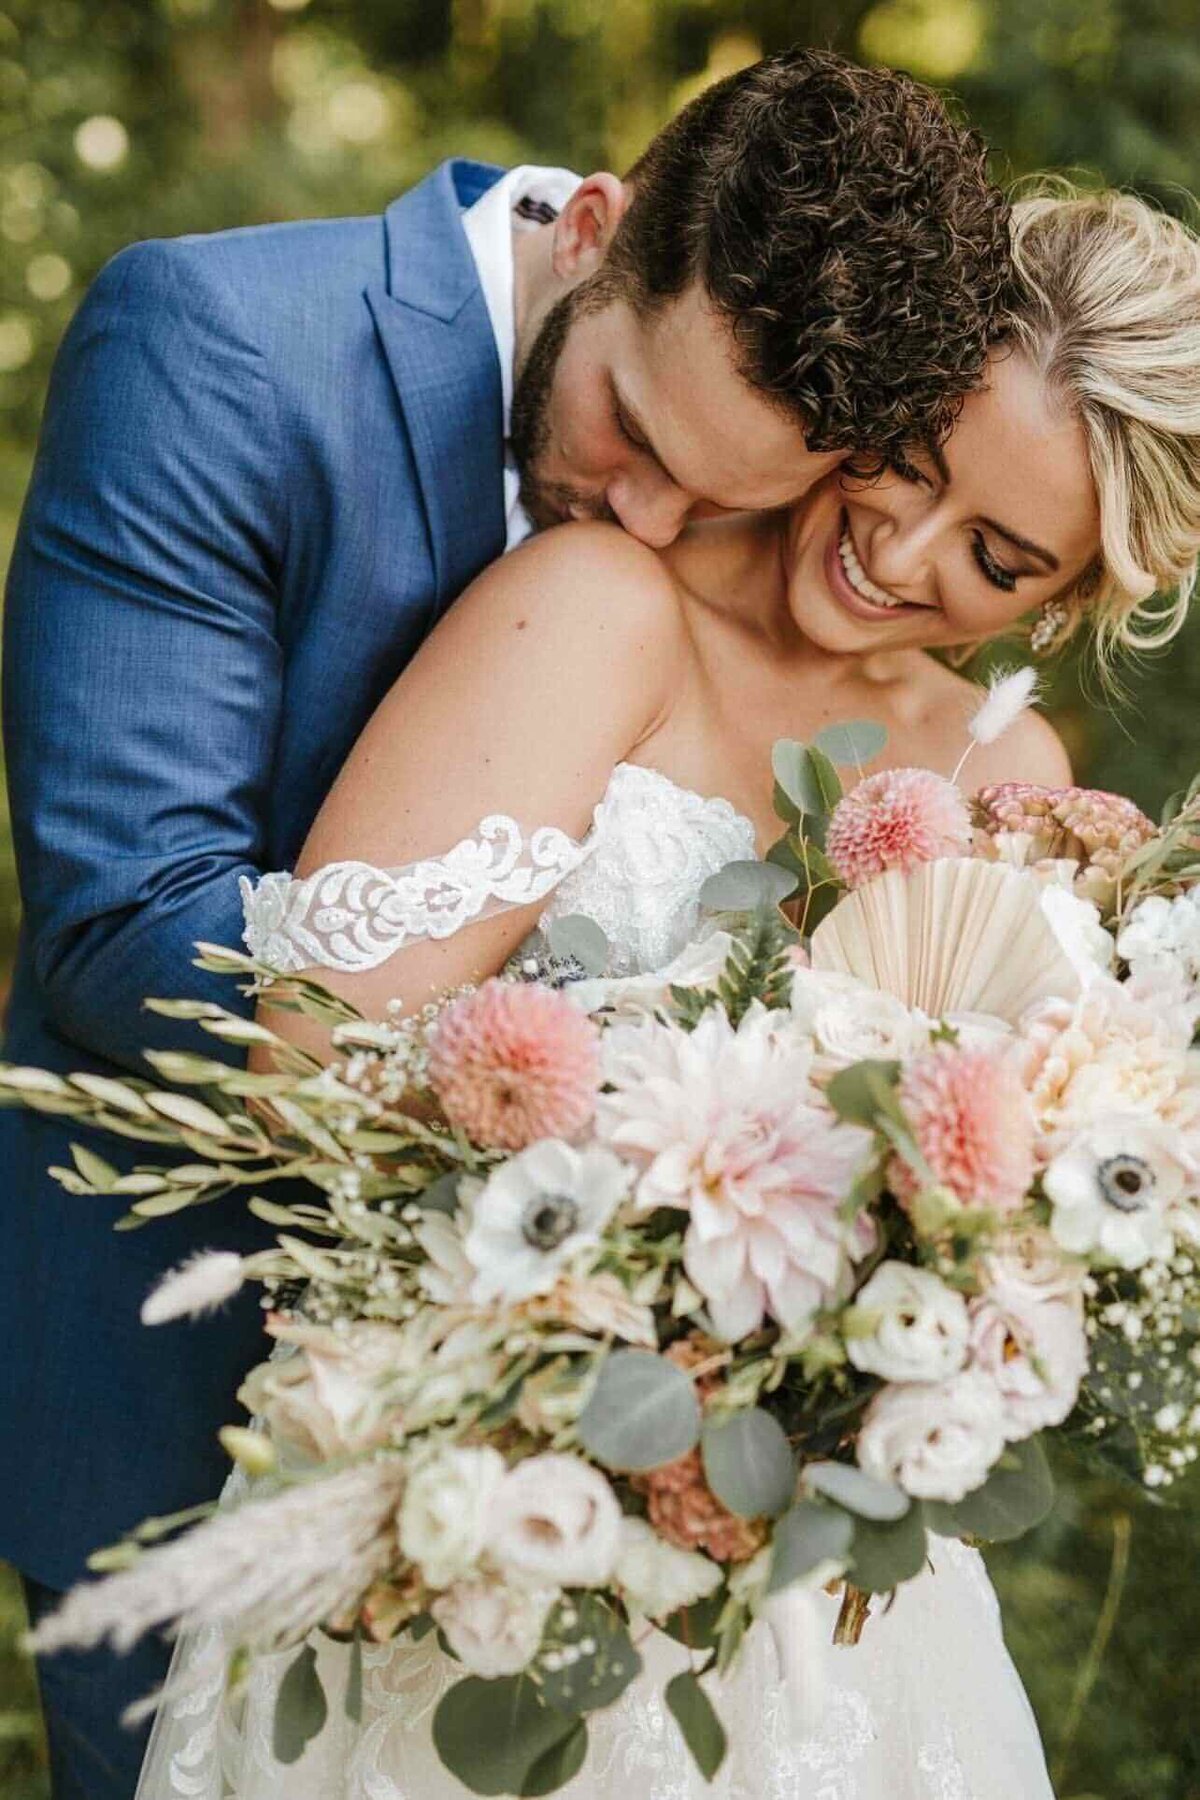 Natalie Brown wedding - groom kissing bride's shoulder